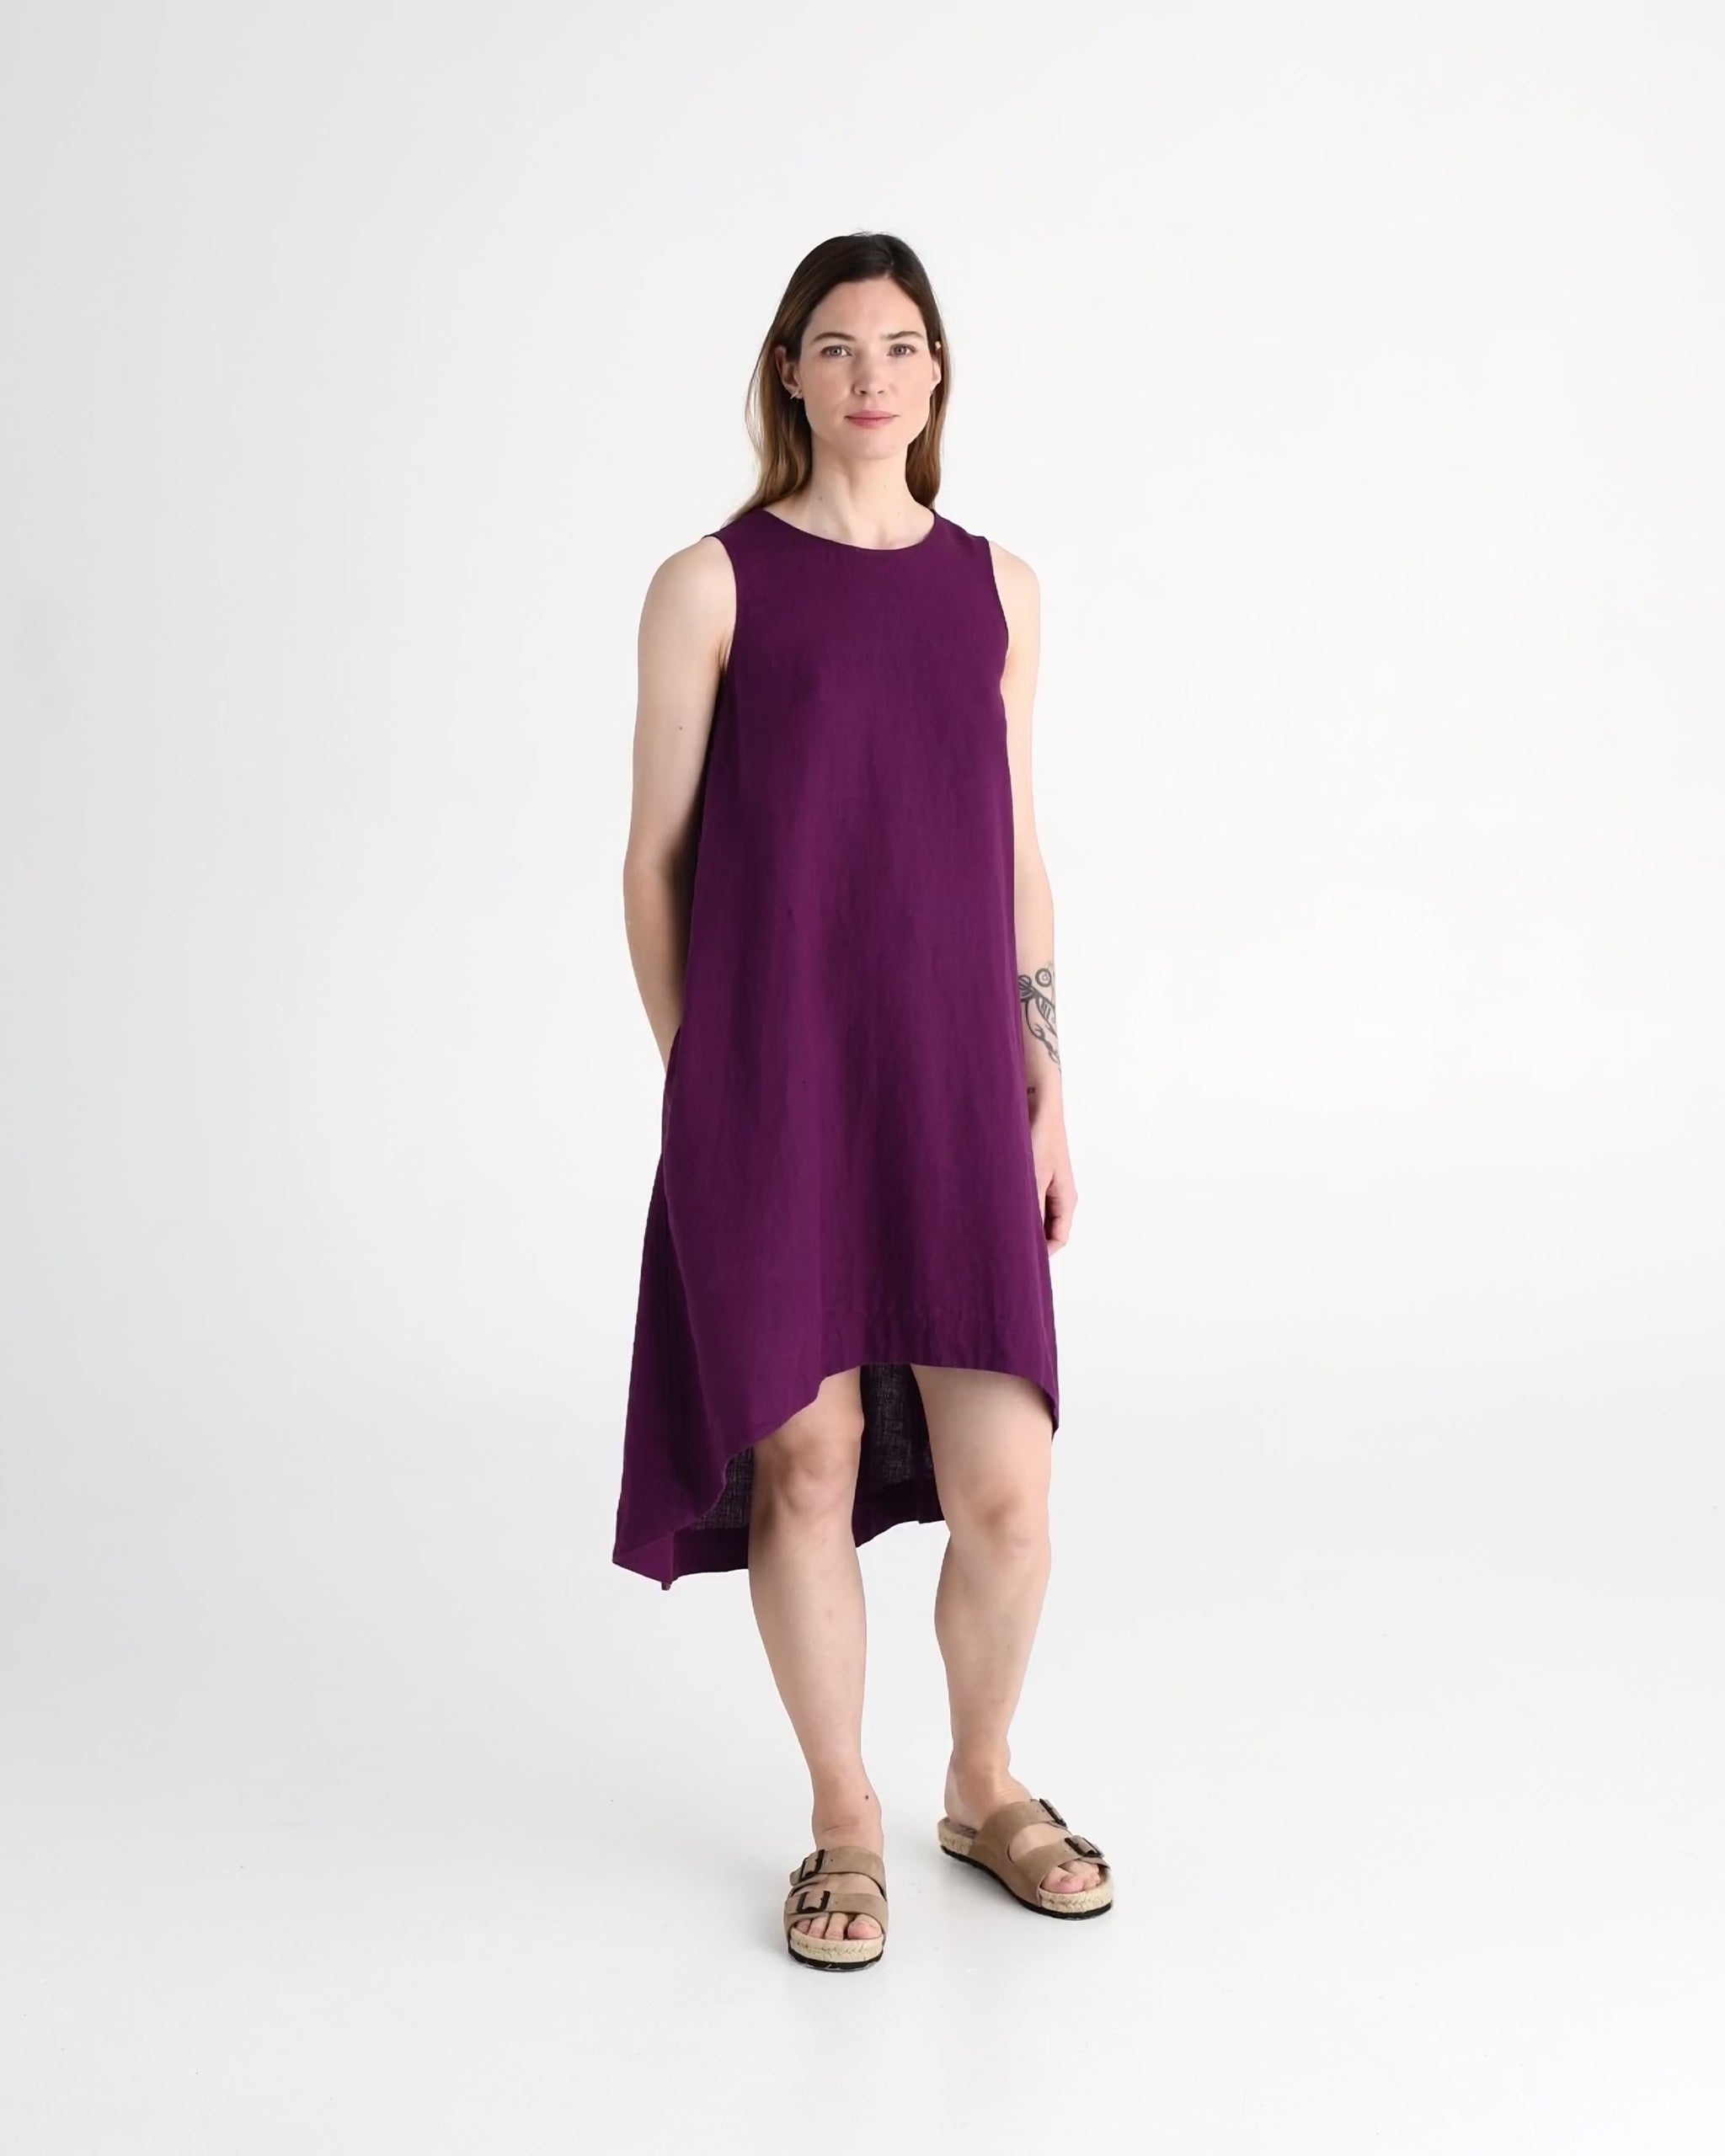 Royal TOSCANA linen dress in Royal purple - MagicLinen